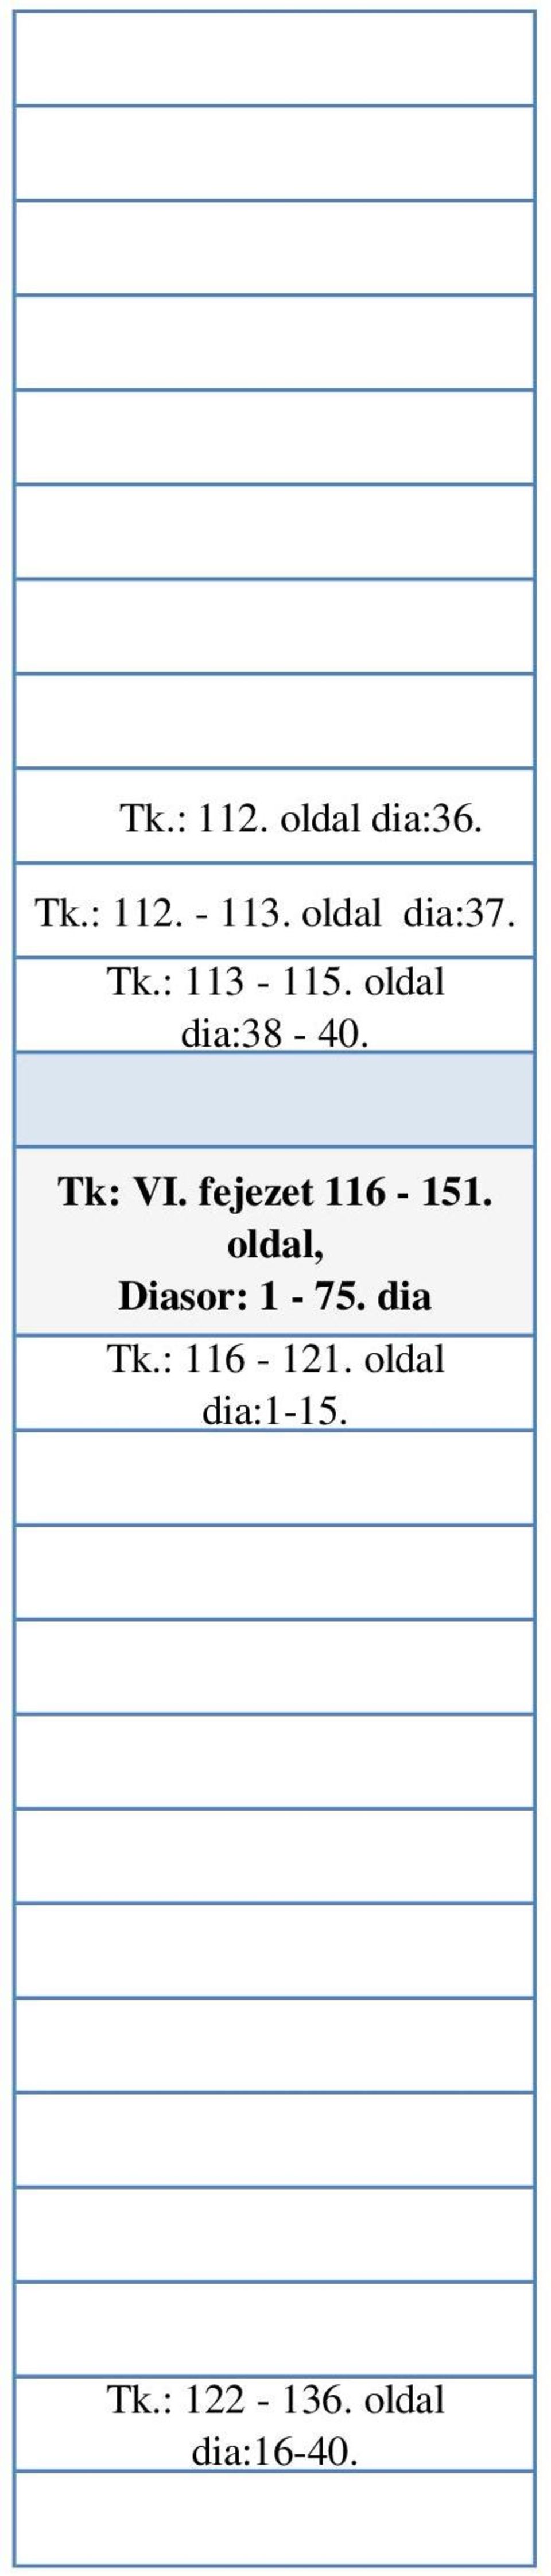 Tk: VI. fejezet 116-151. oldal, Diasor: 1-75.